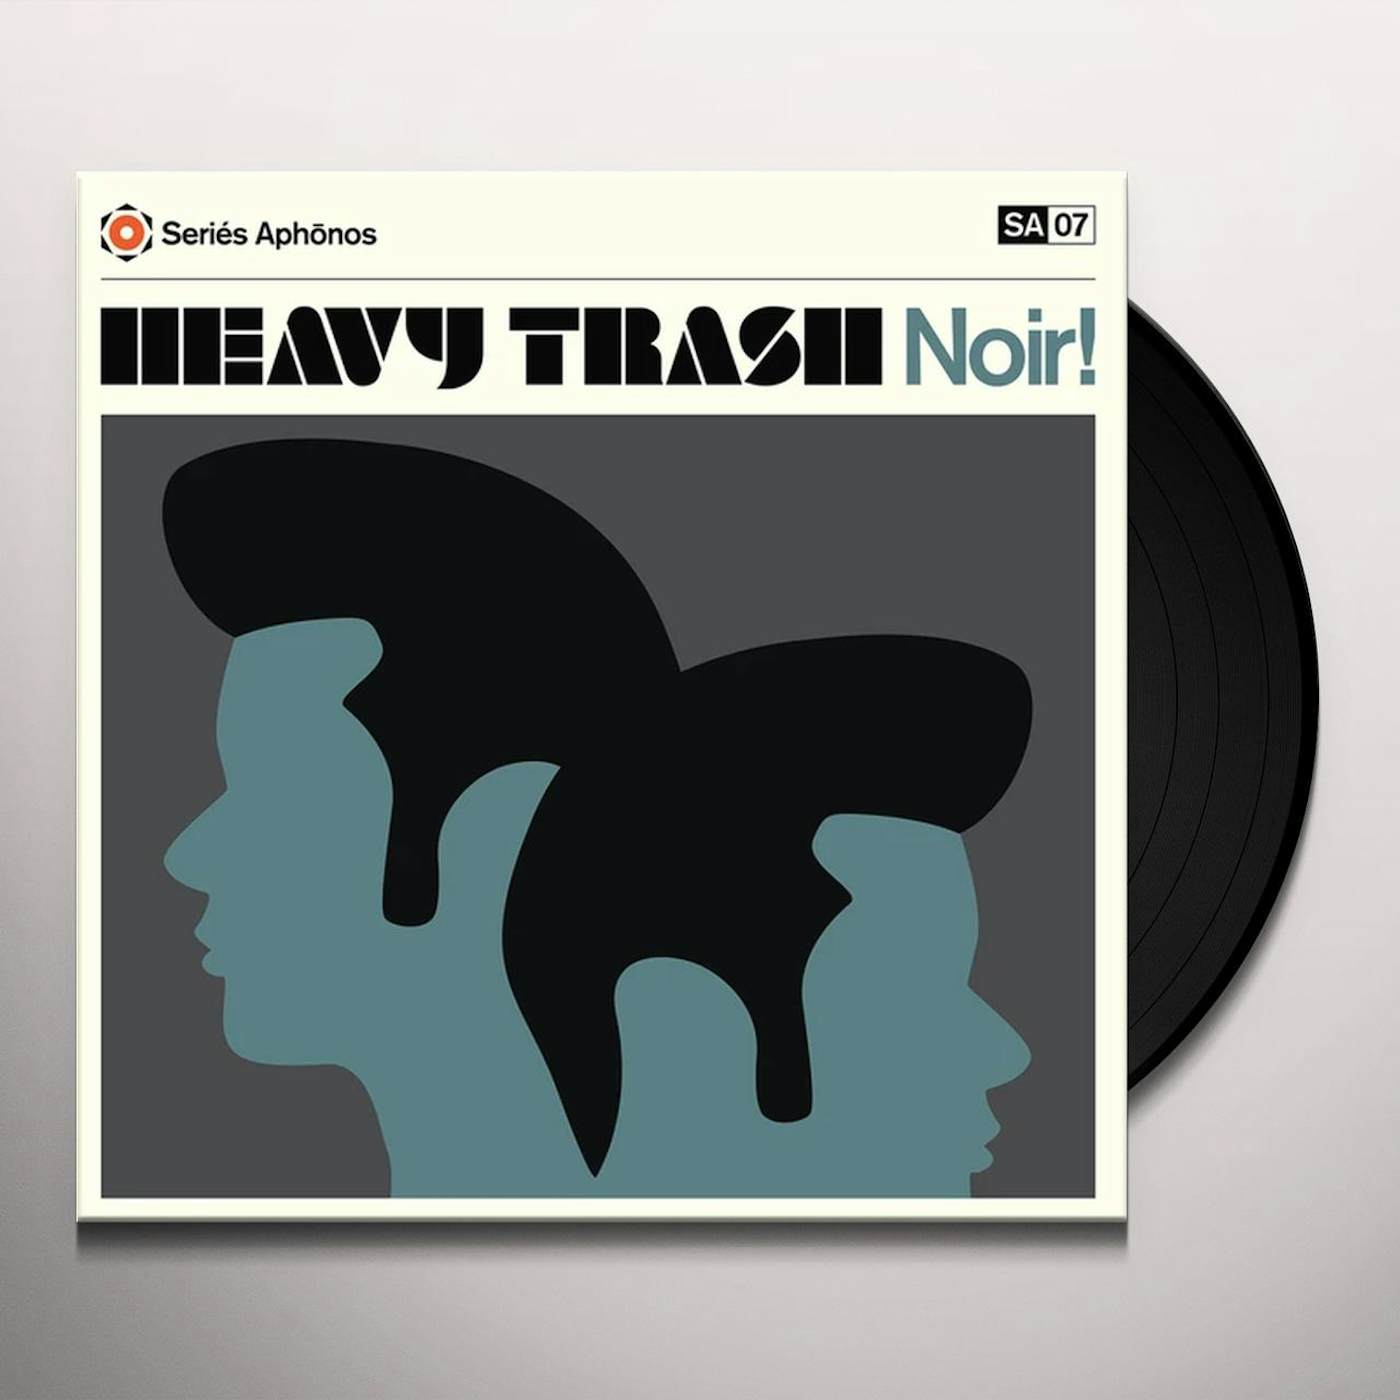 Heavy Trash Noir! Vinyl Record